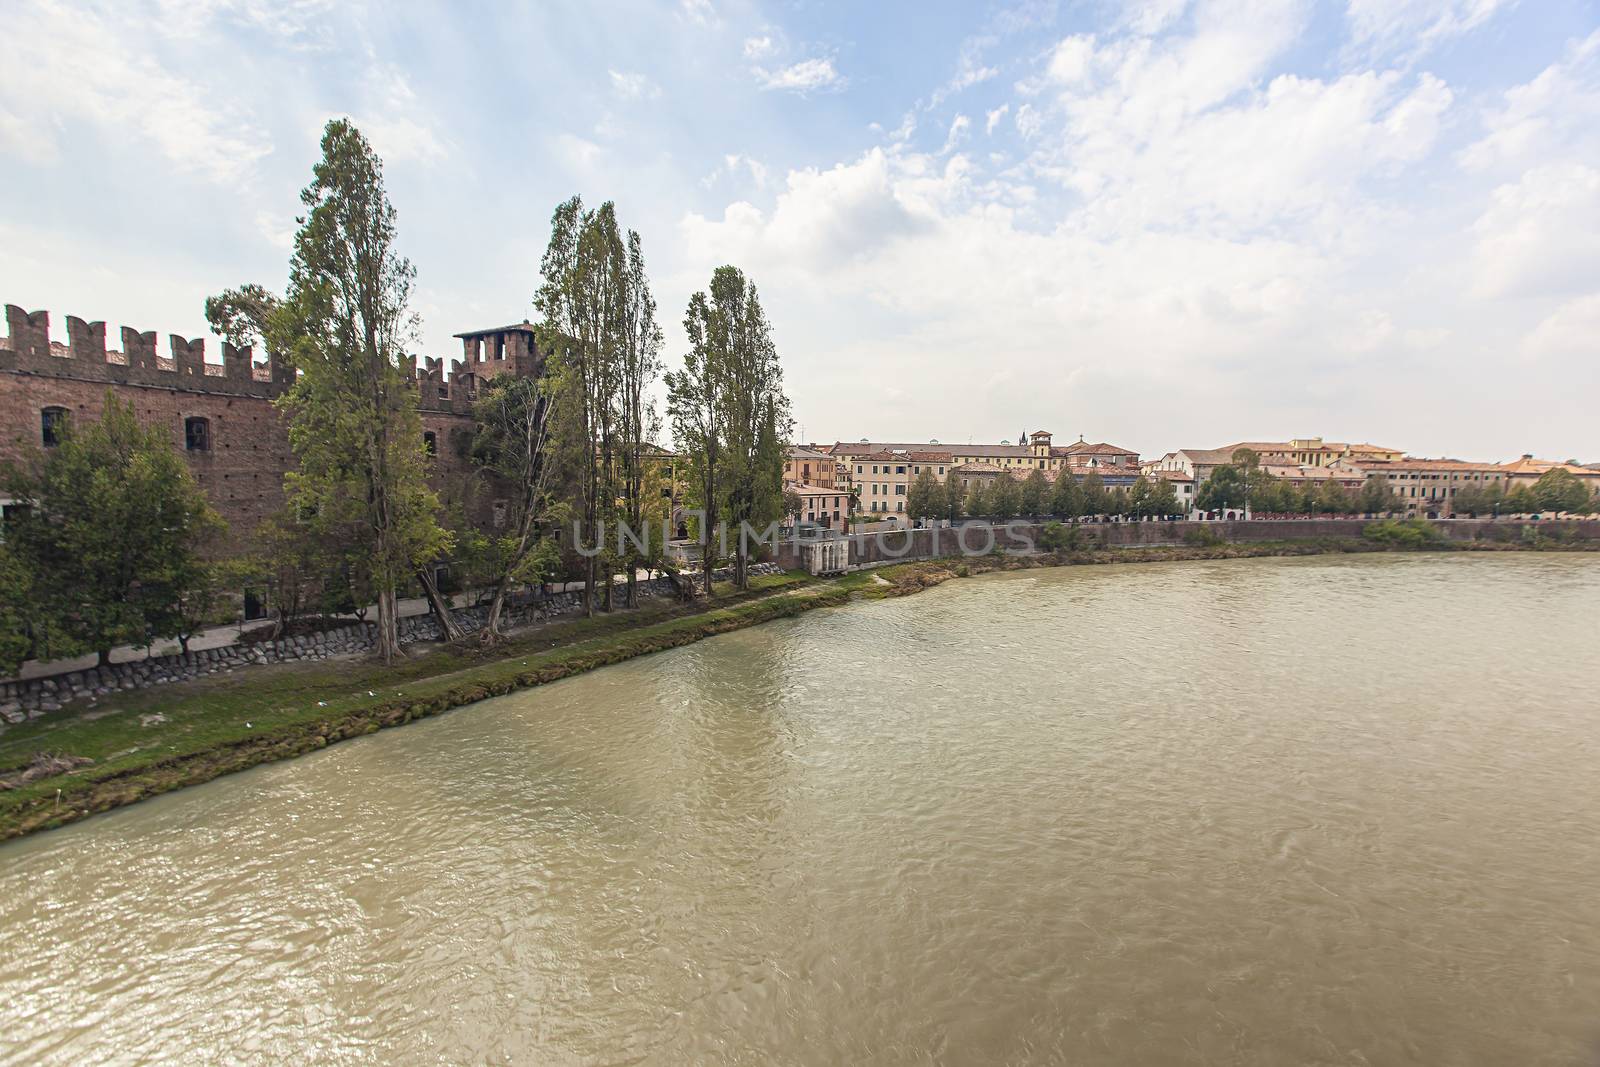 Adige river landscape view in Verona by pippocarlot